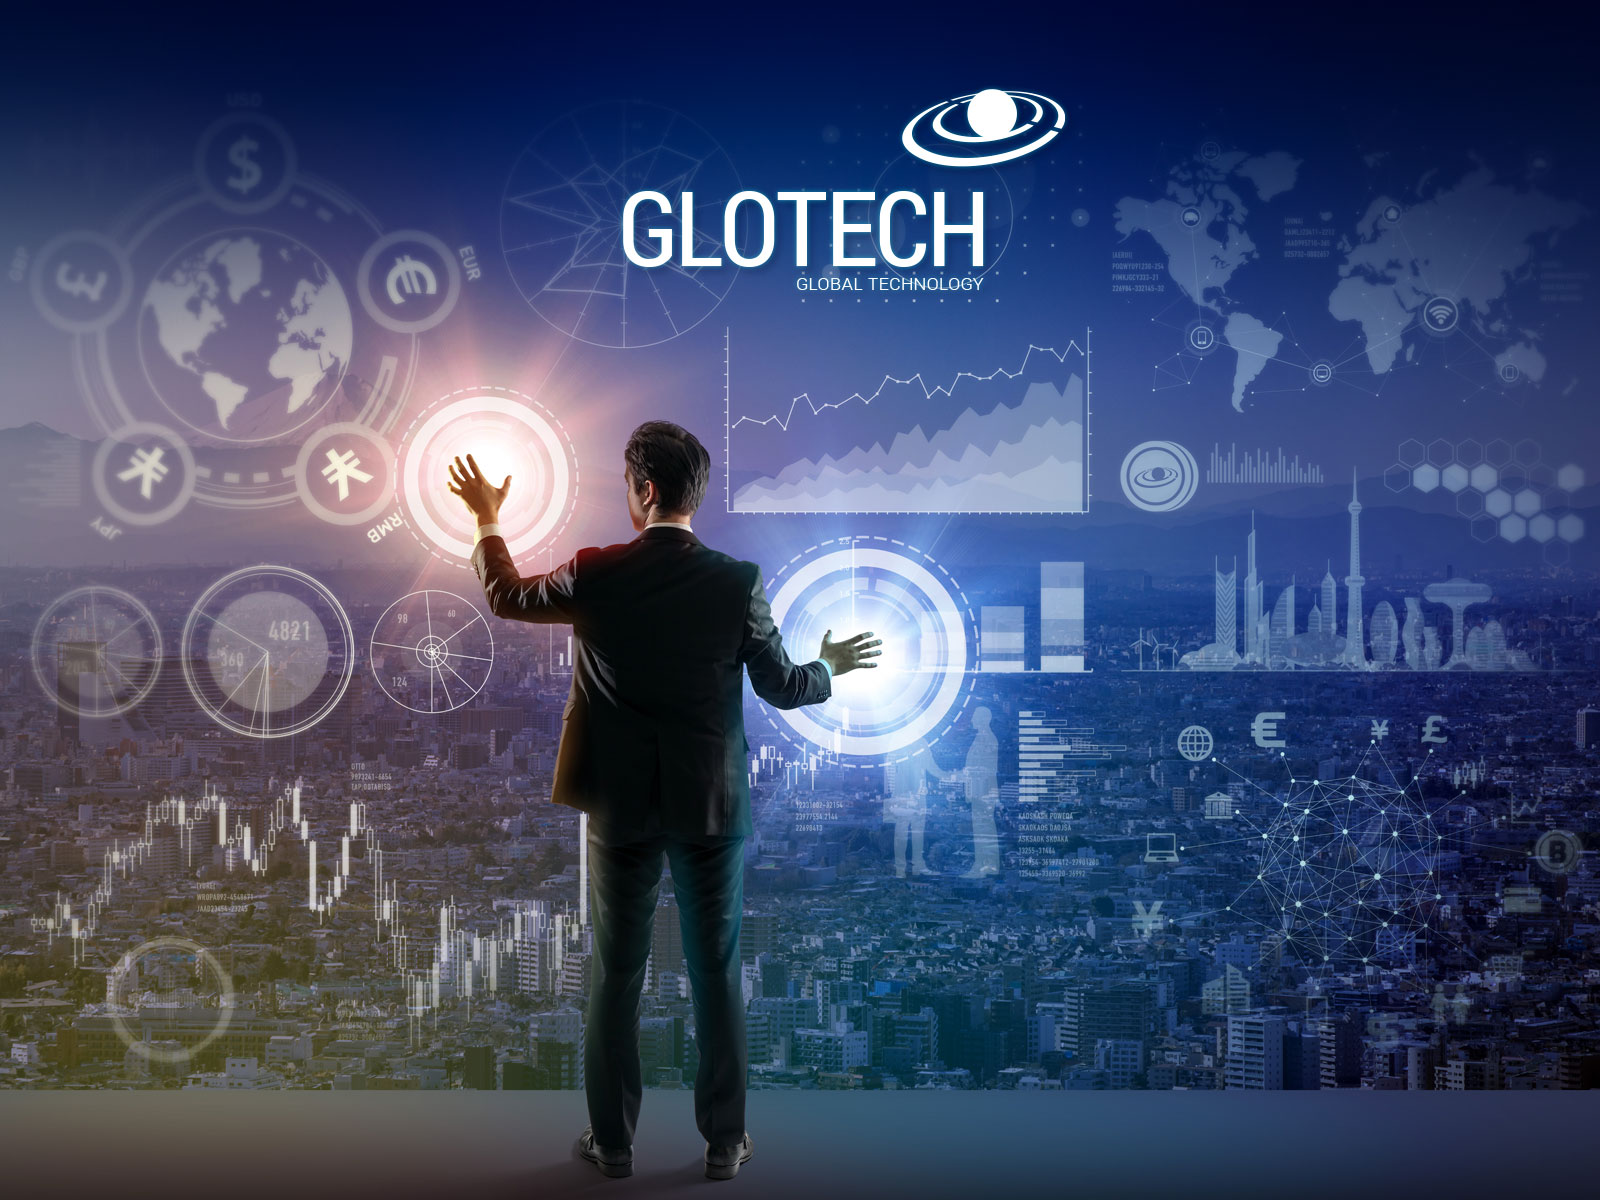 GLOTECH global technology